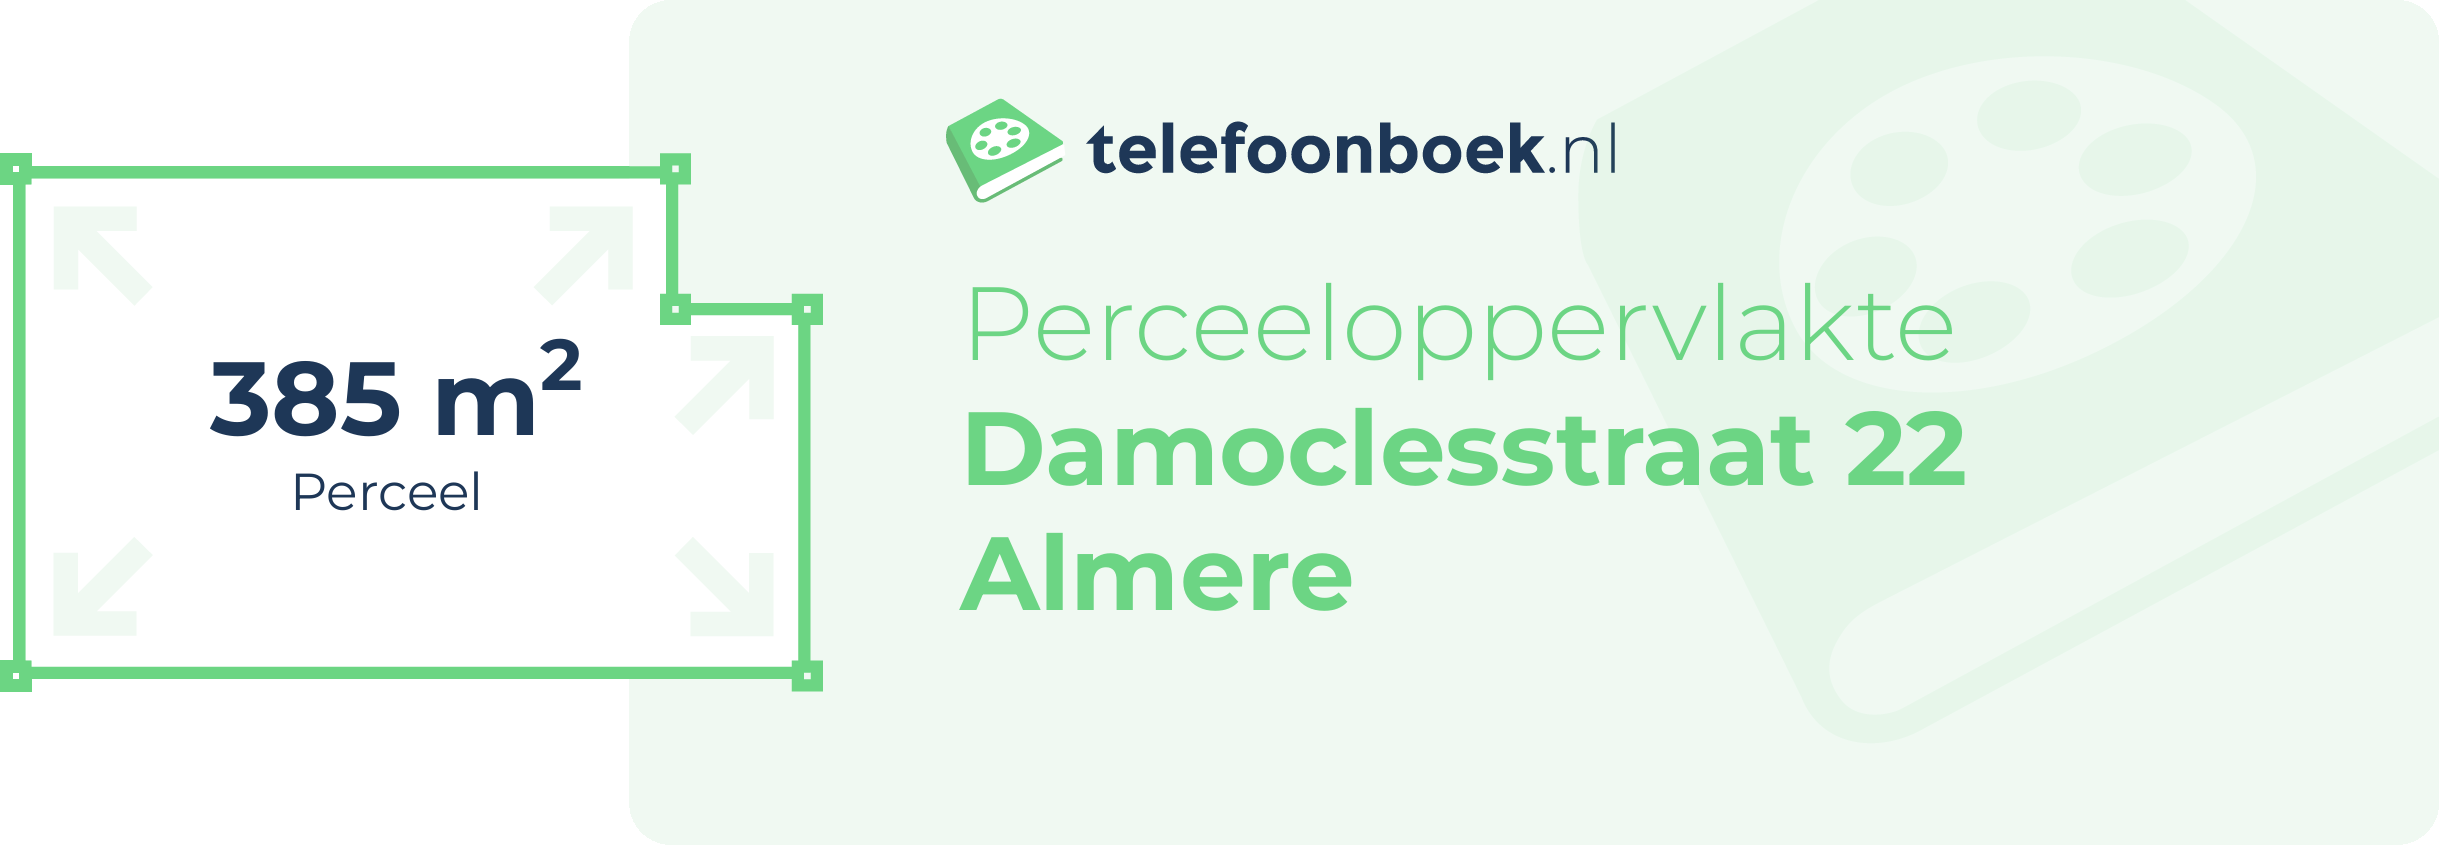 Perceeloppervlakte Damoclesstraat 22 Almere